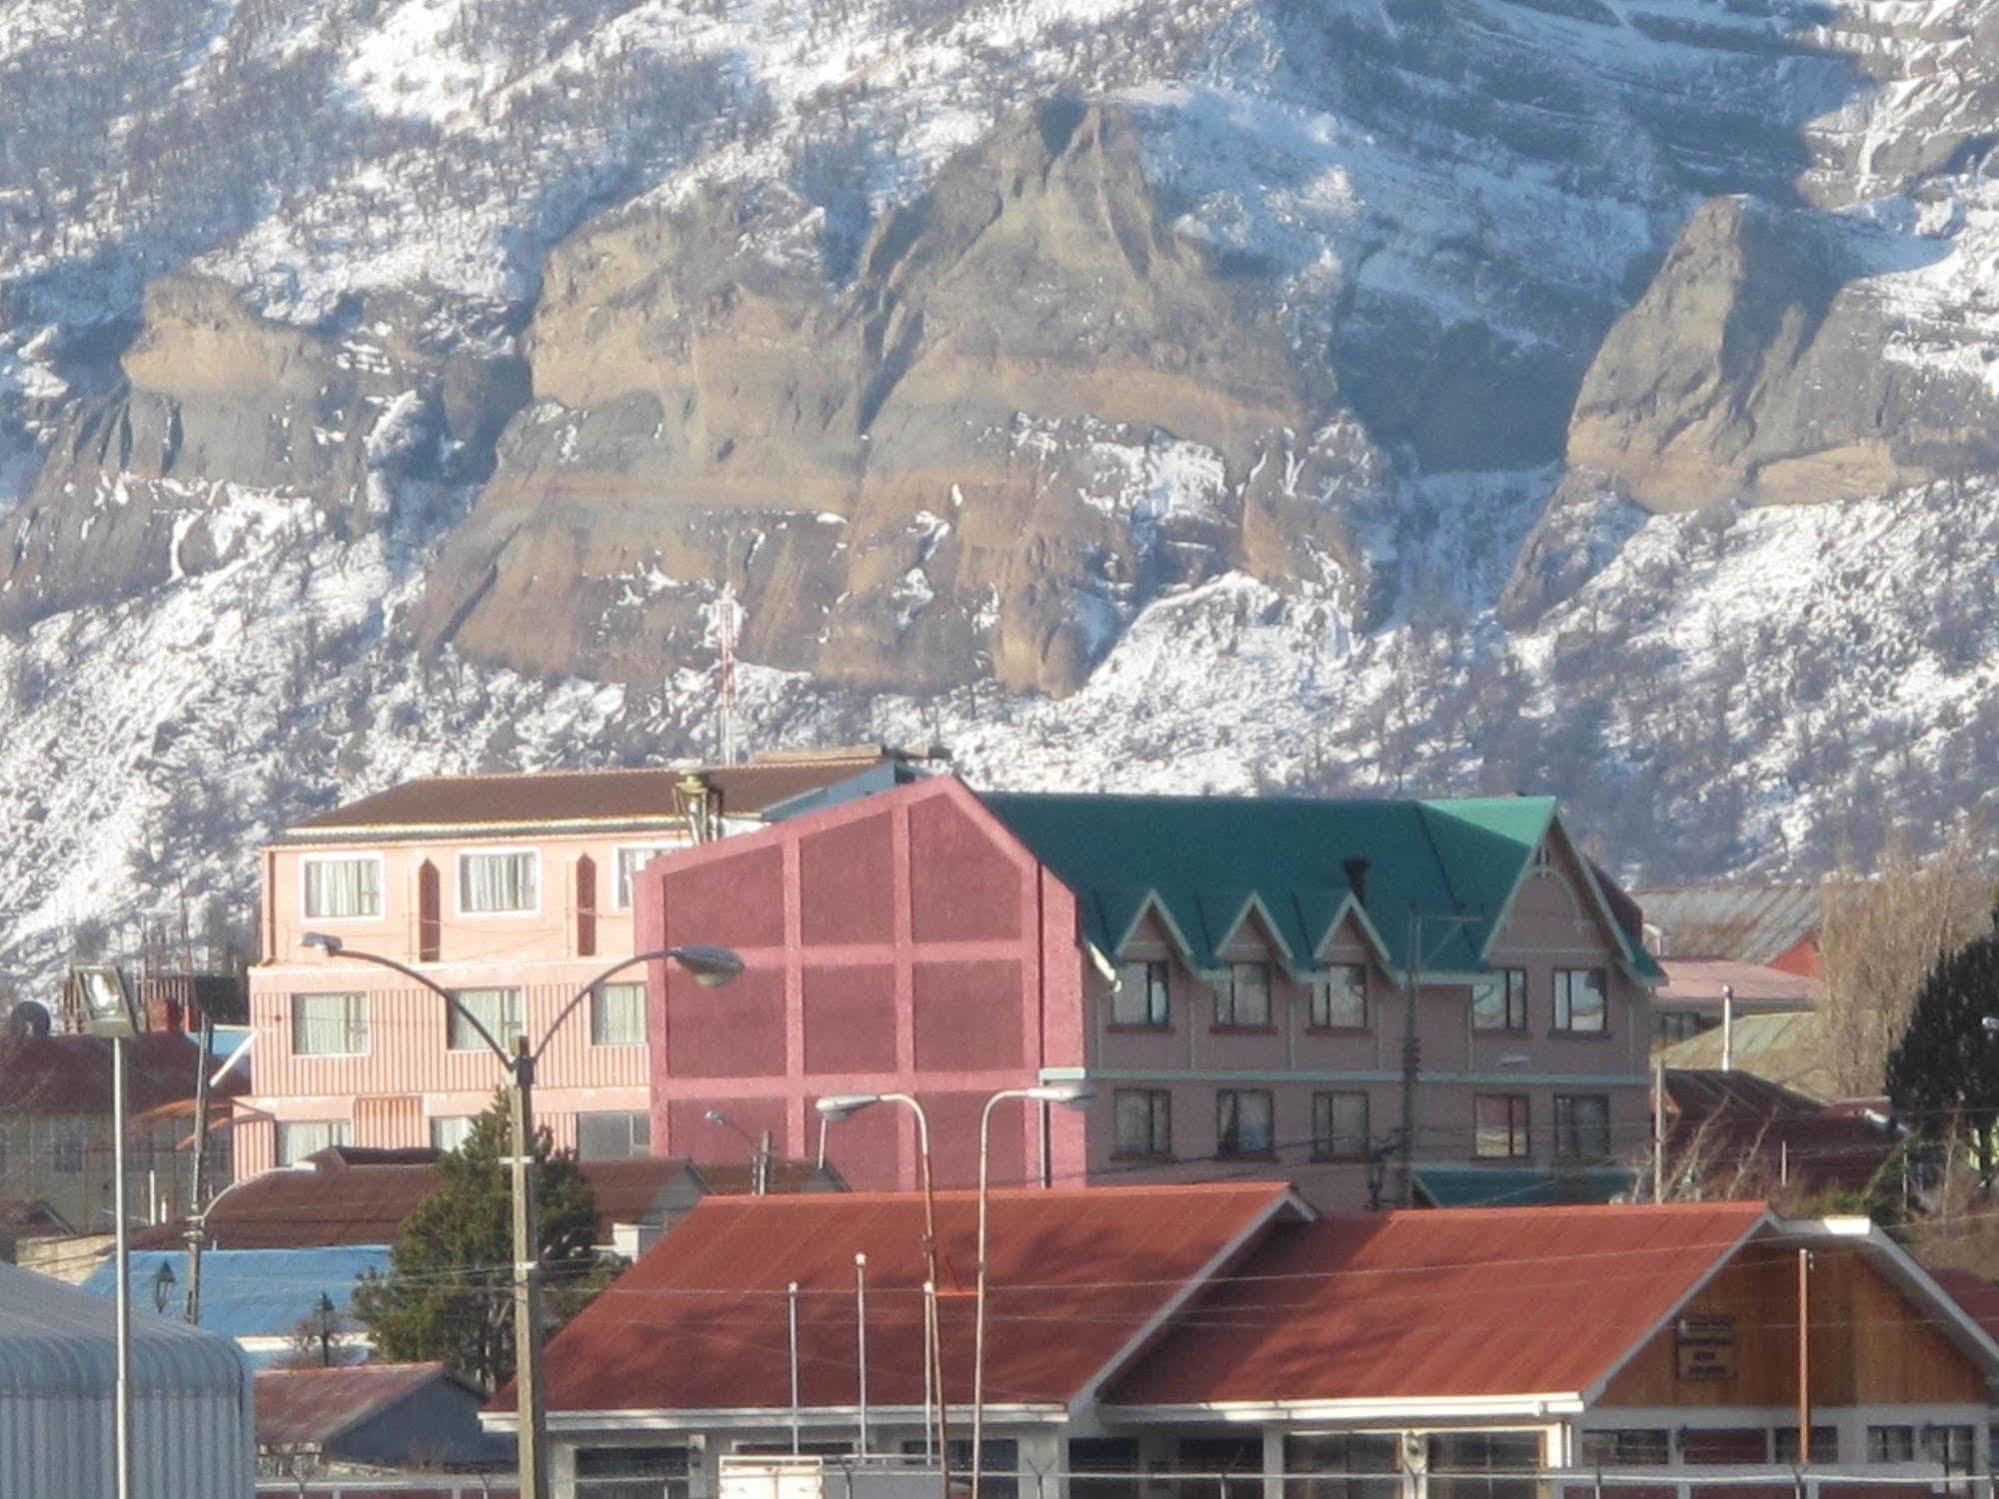 Hotel Saltos Del Paine Puerto Natales Exterior photo